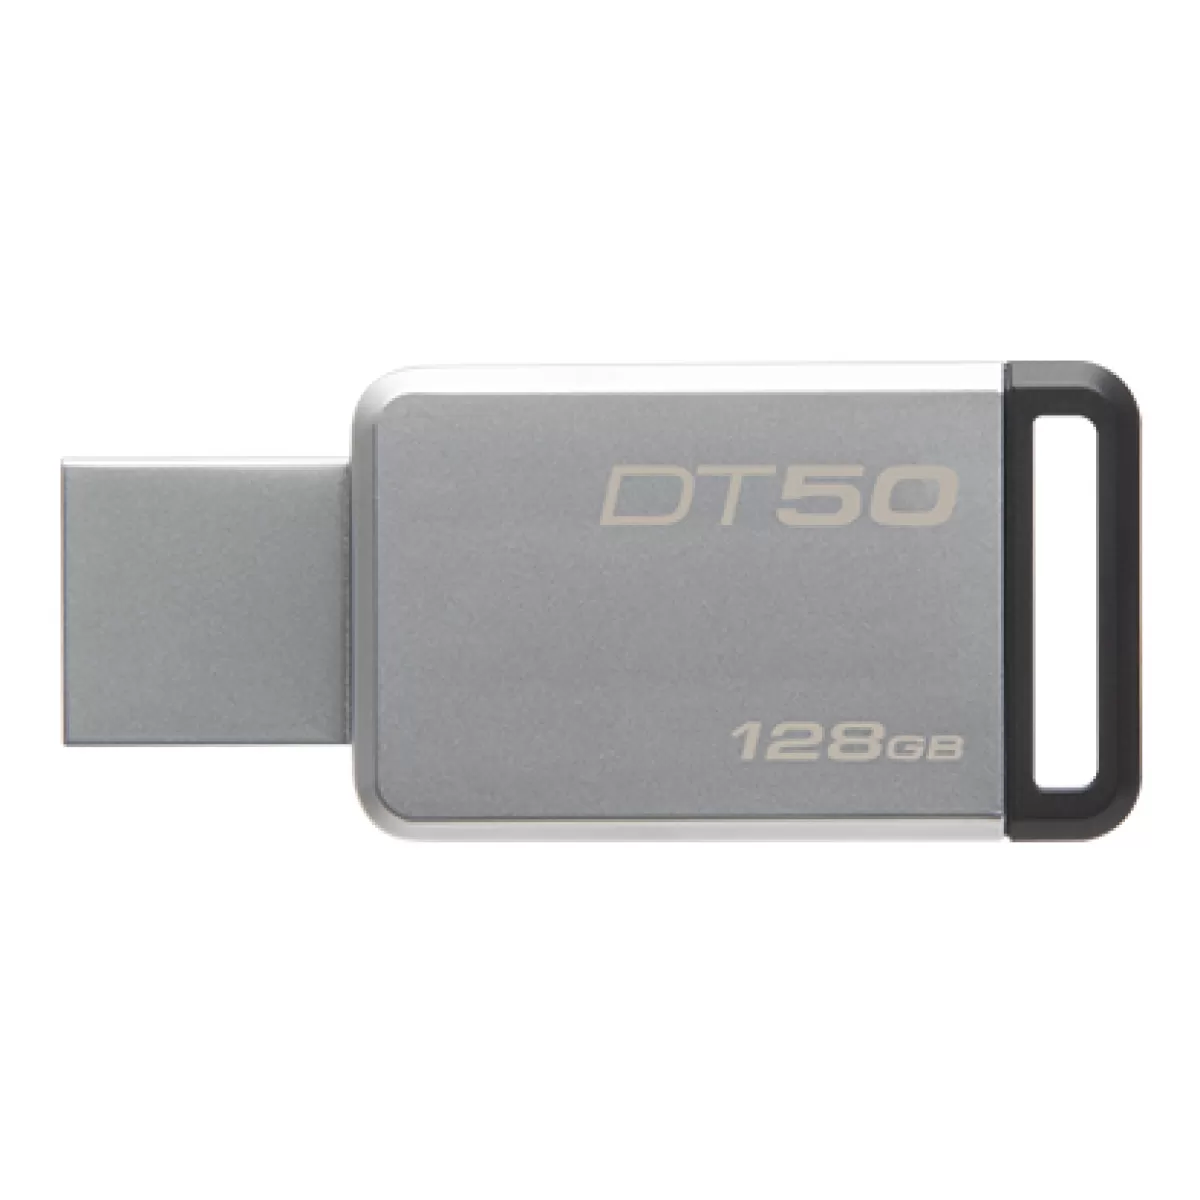 USB памет 128GB USB3.0 KINGSTON DT50